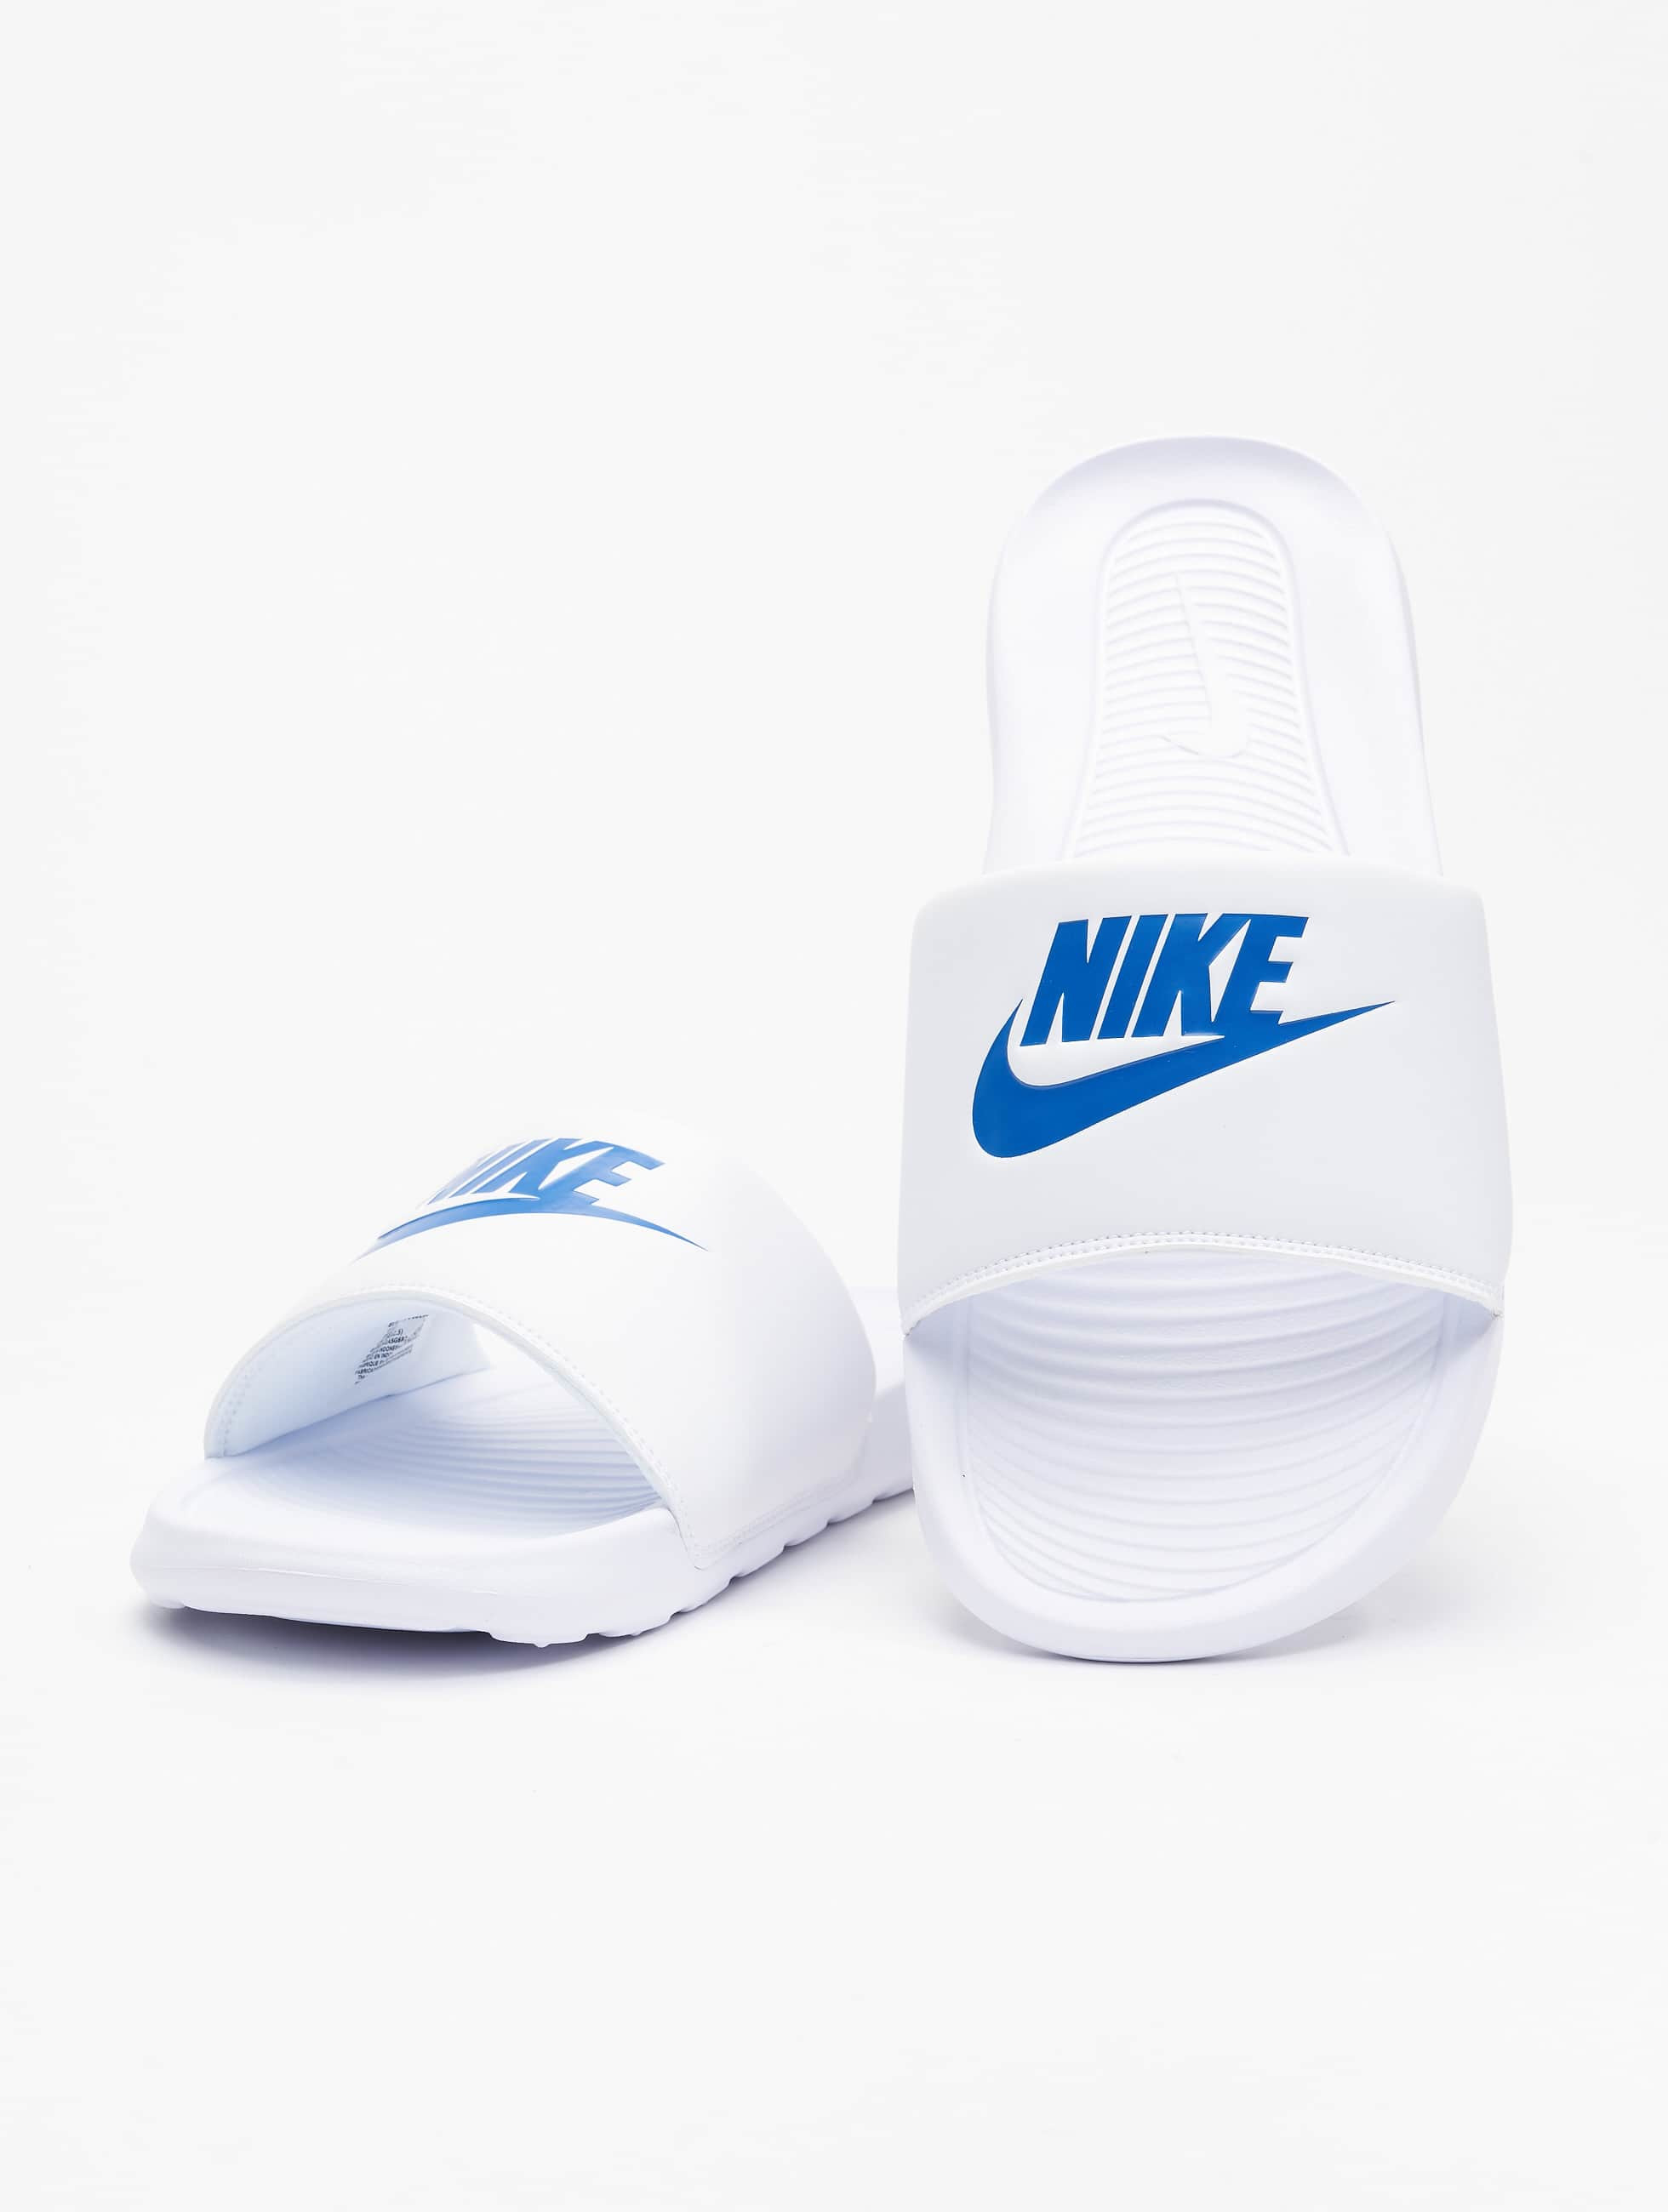 Meevoelen Goed opgeleid oogst Nike schoen / Slipper/Sandaal Victori One Slide in bont 821286